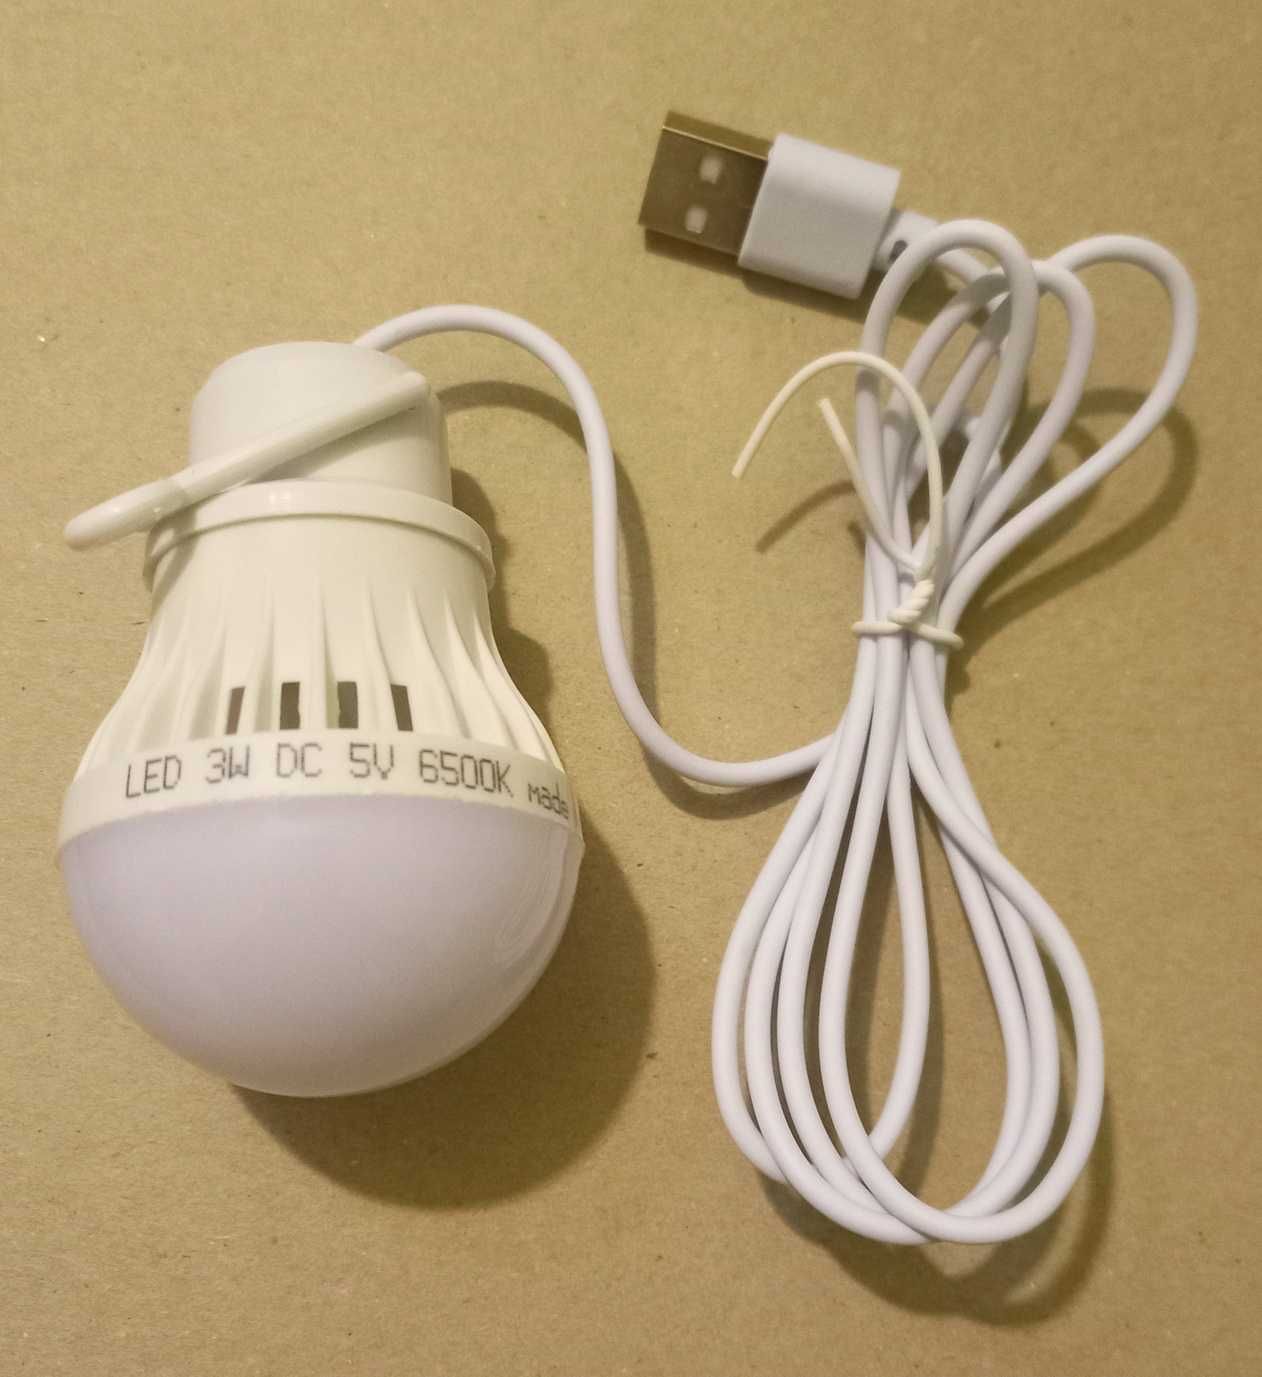 LED USB лампочка 5 вольт світлодіодна лампочка світодіодна USB лампа